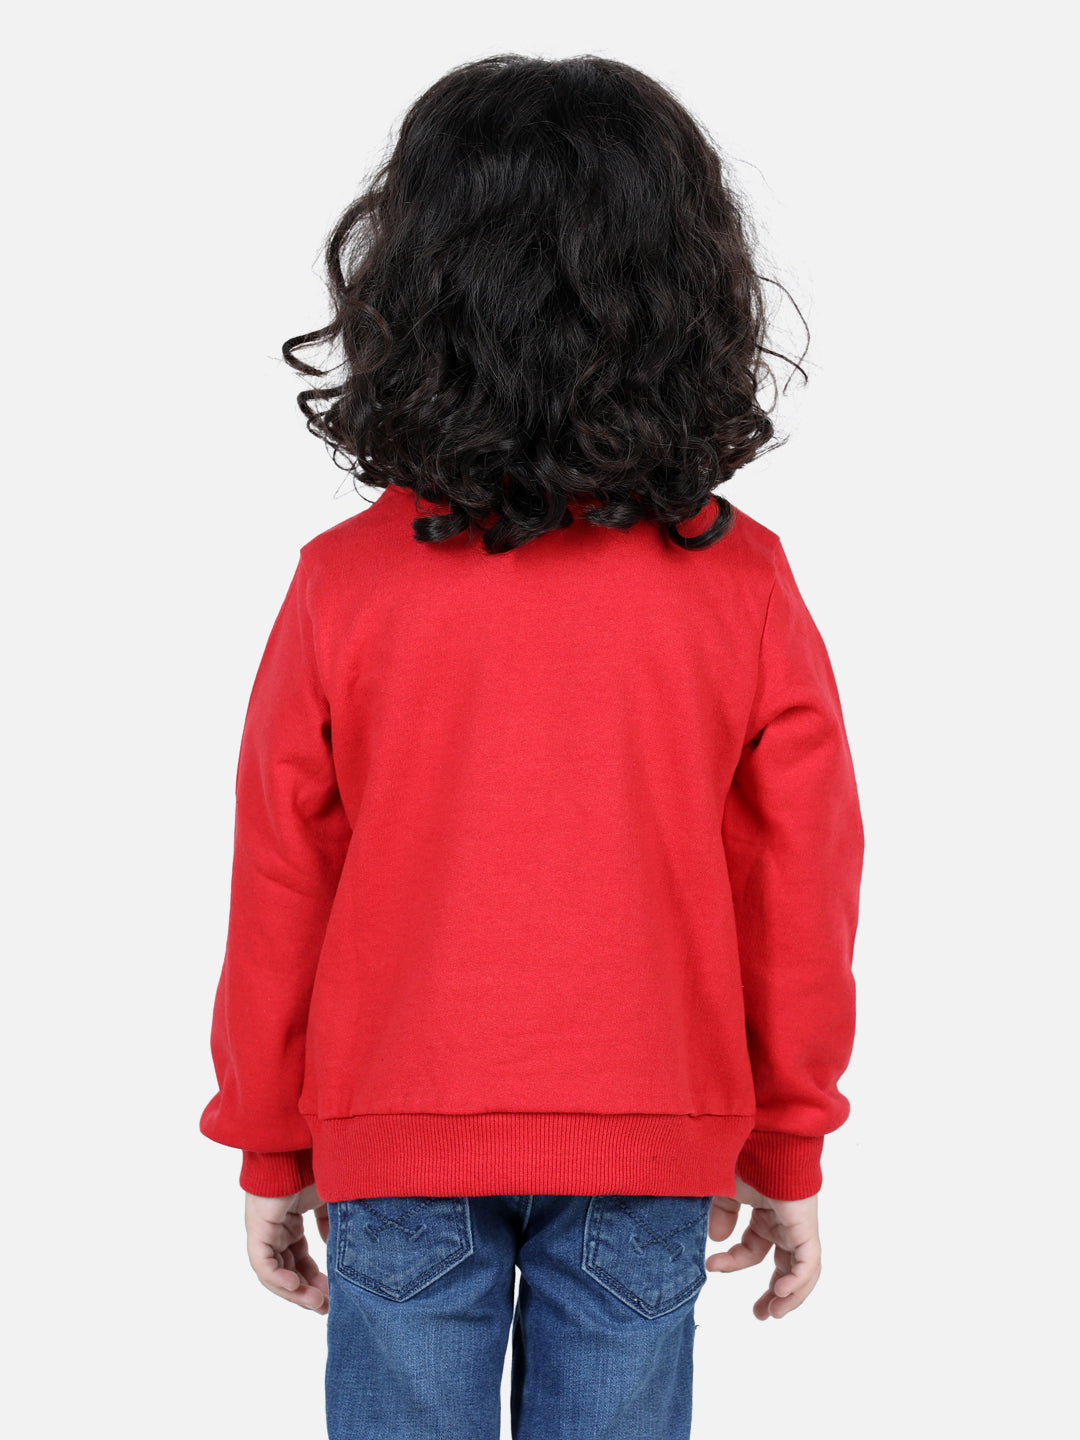 BownBee Full Sleeve Sweatshirt for Boys- Red